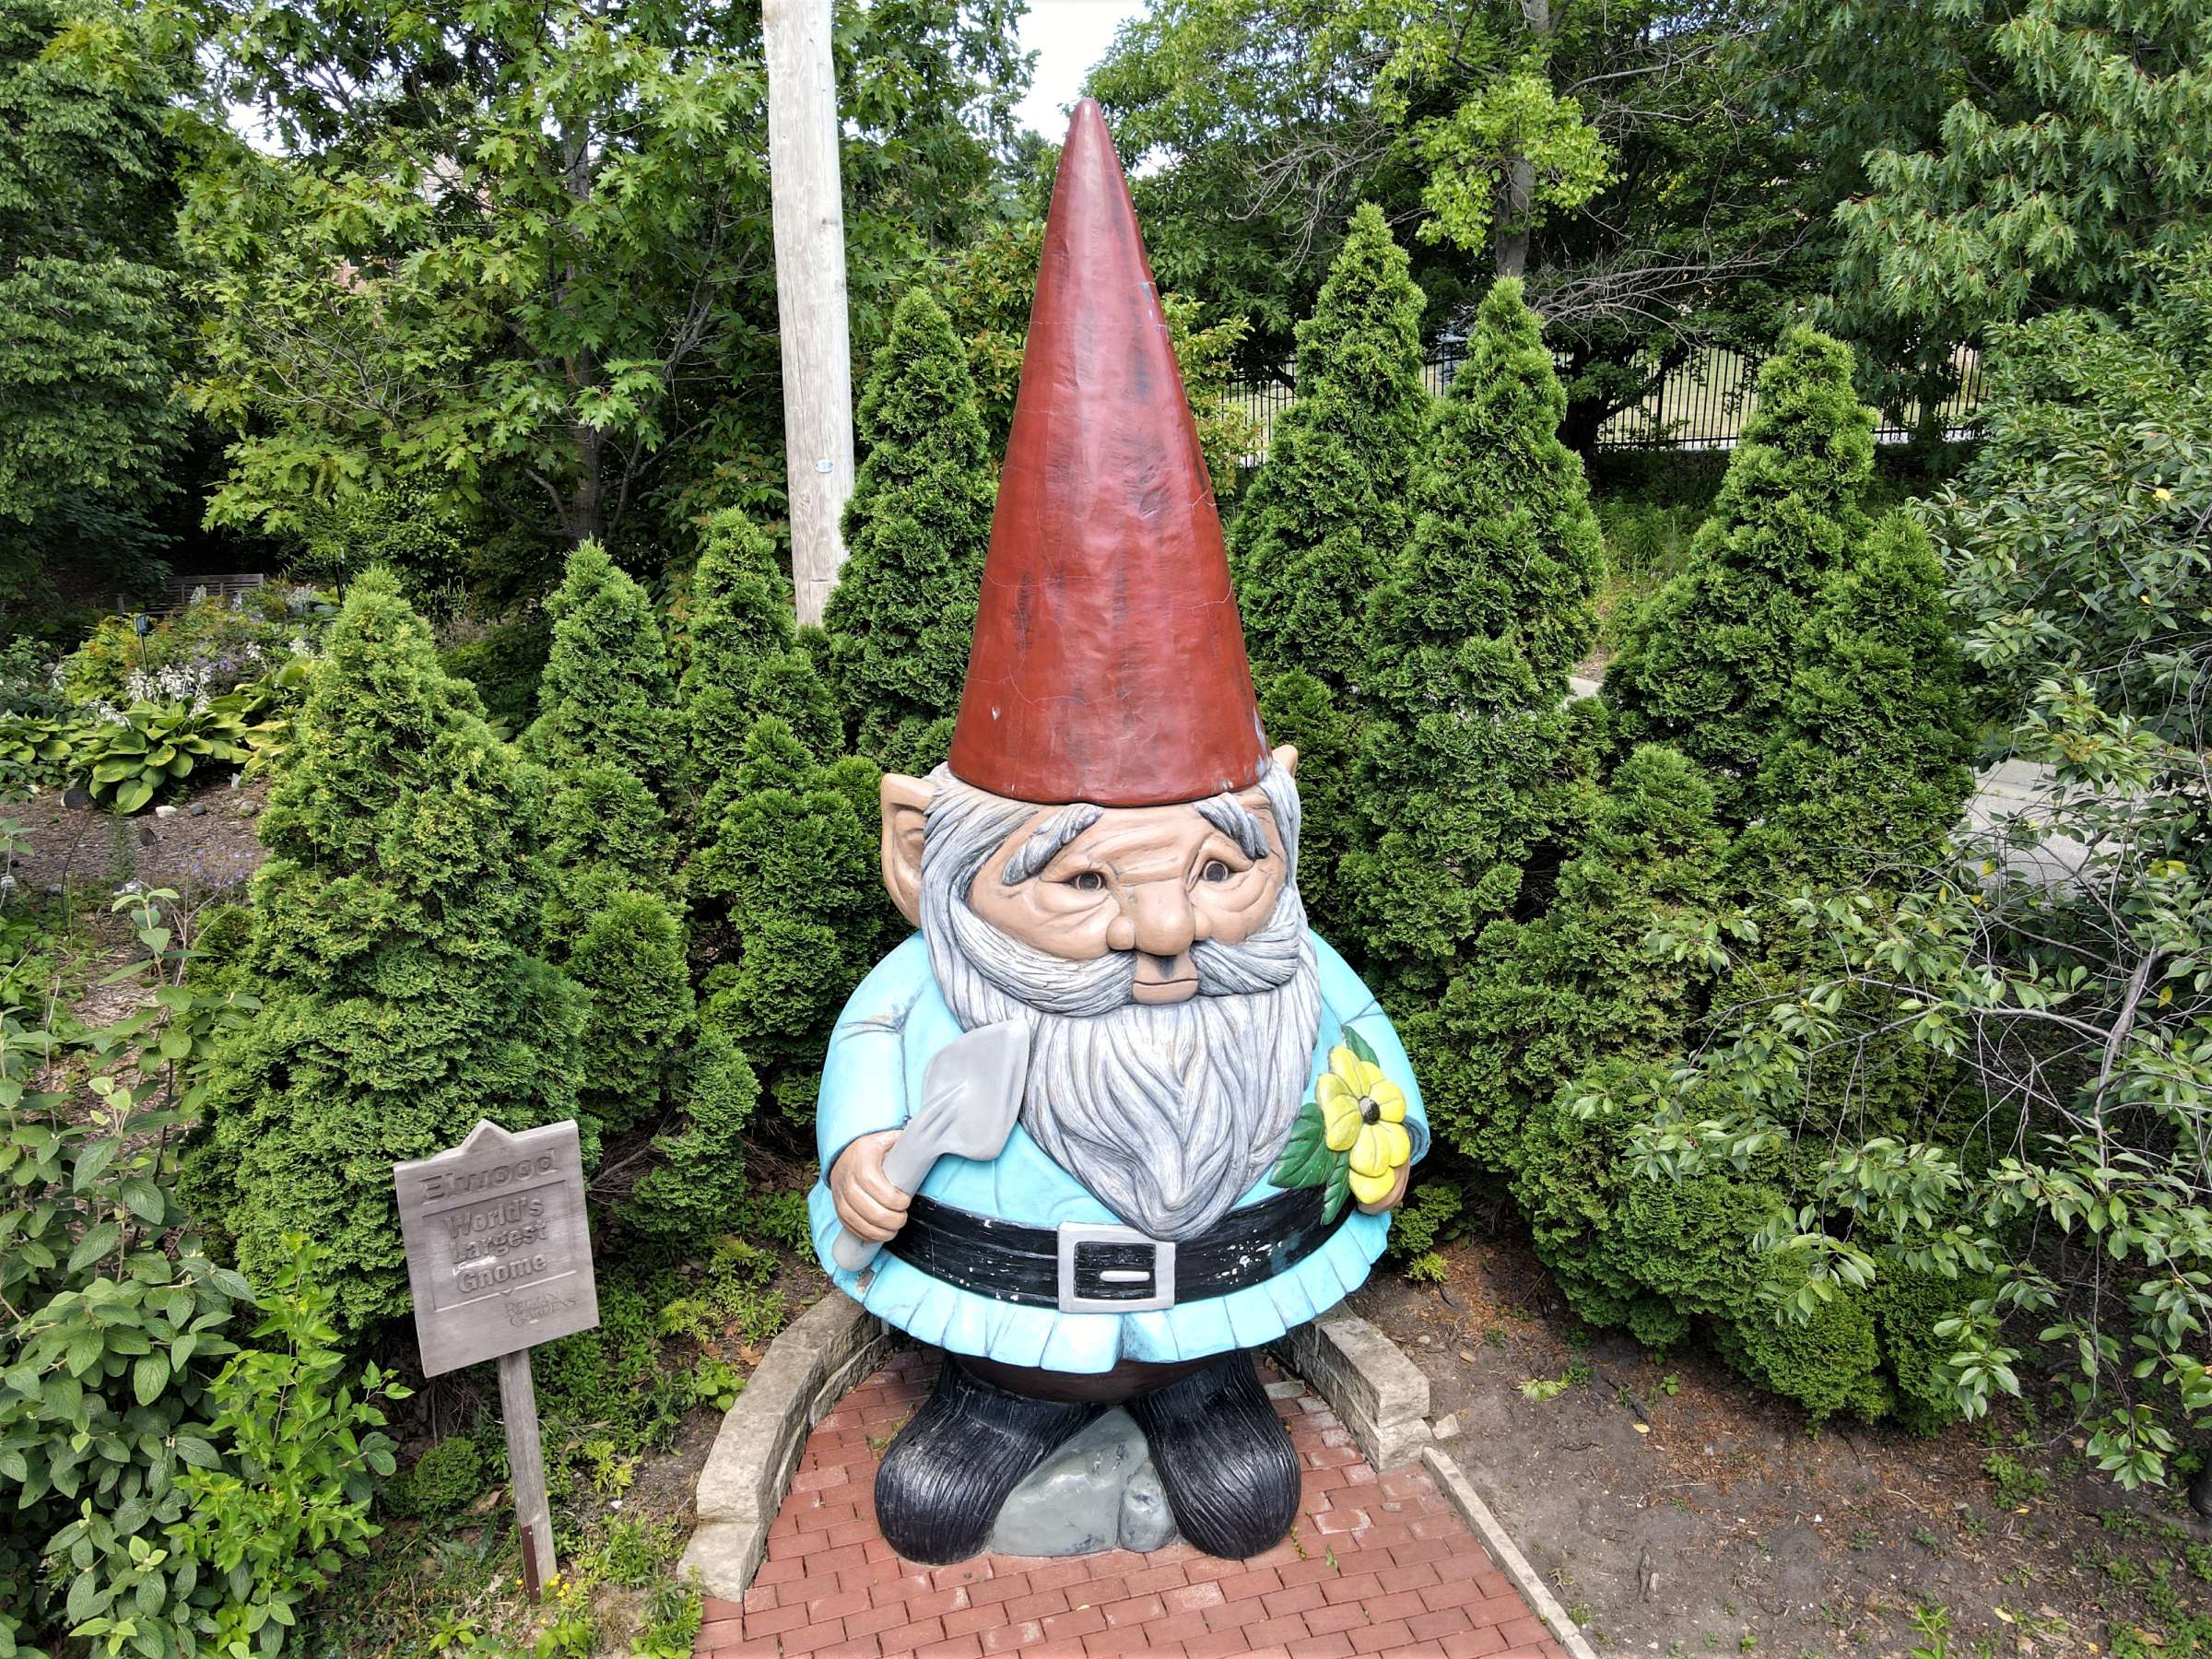 Elwood the World's Largest Concrete Gnome